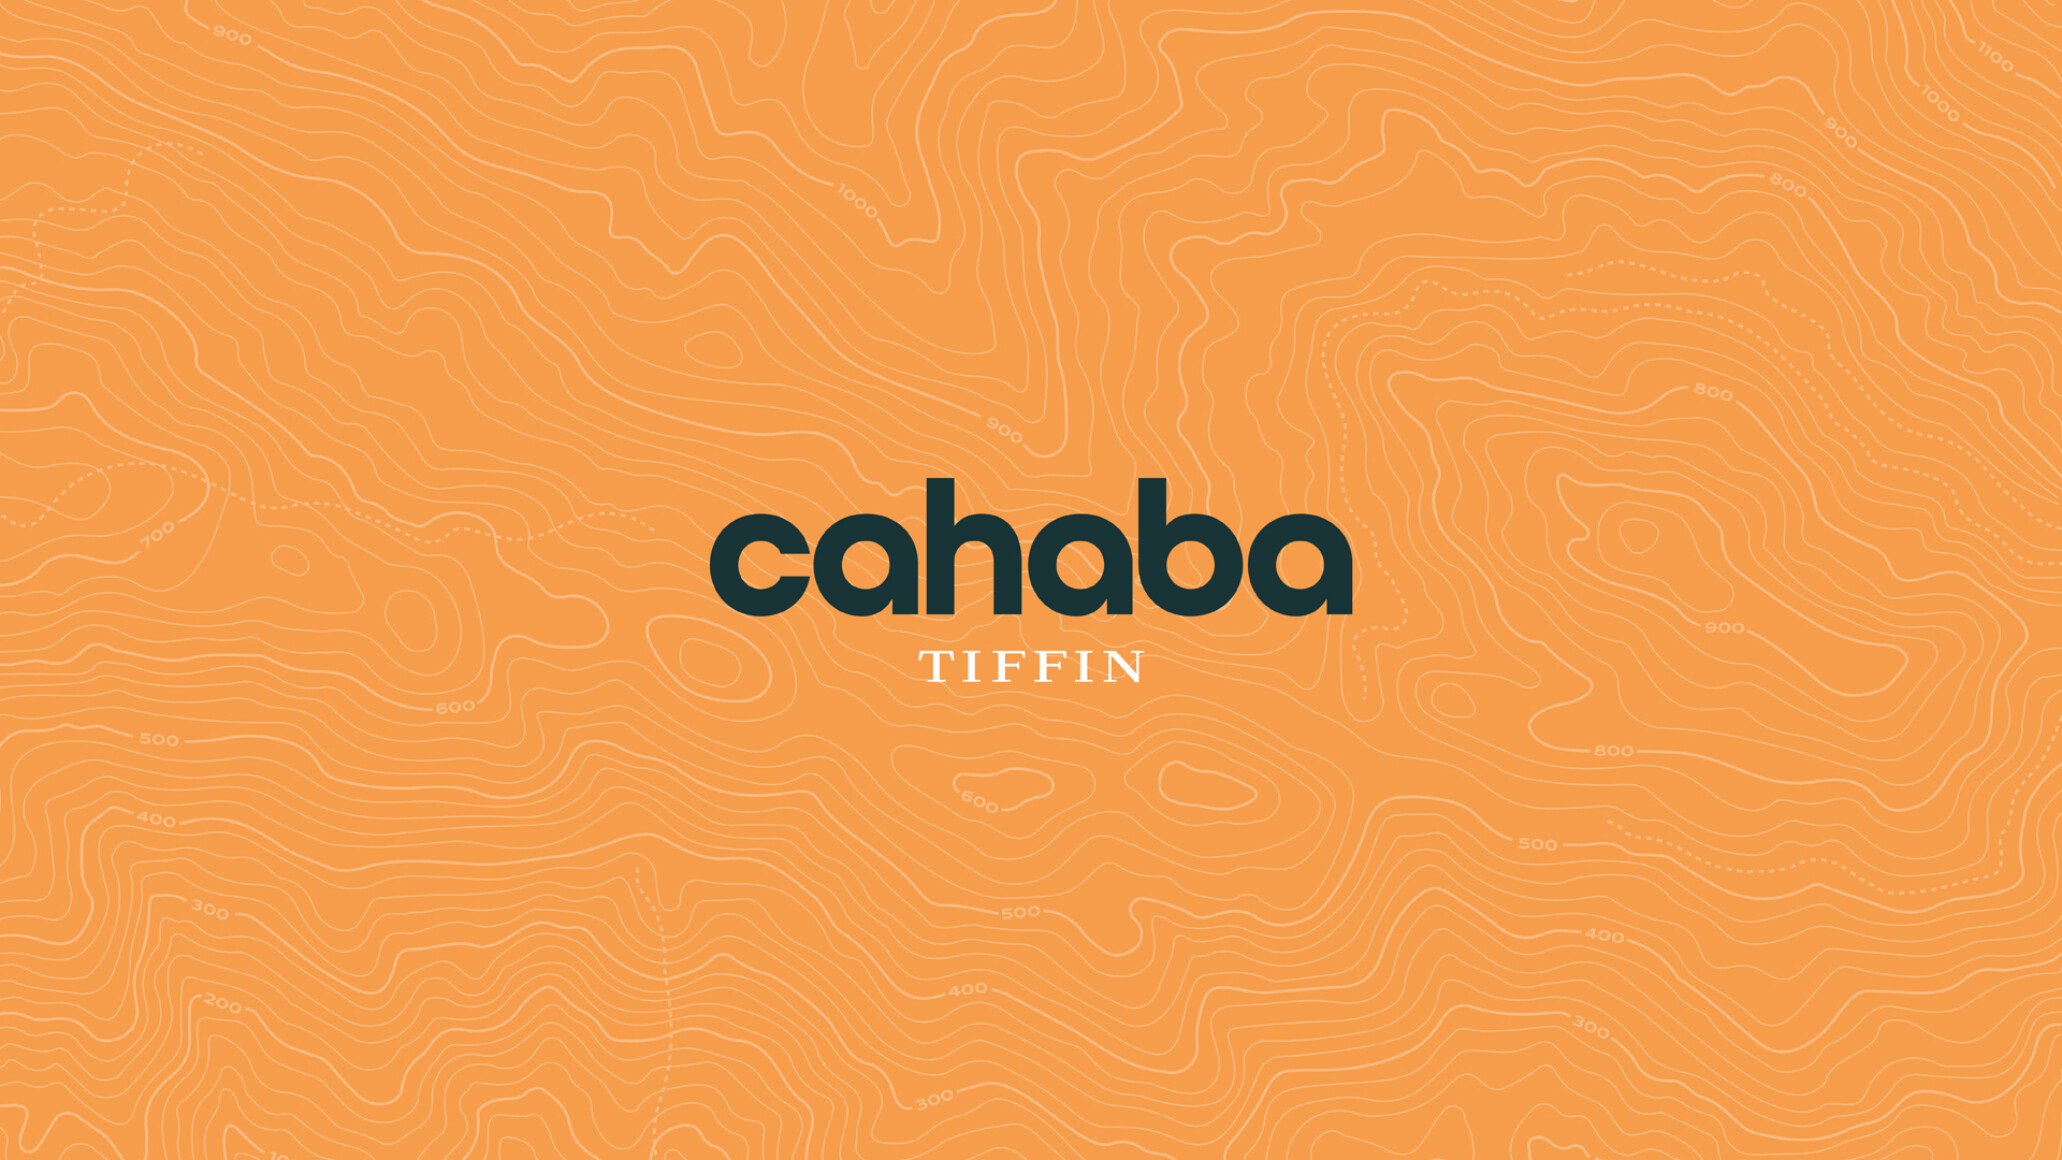 tiffin-cahaba-branding